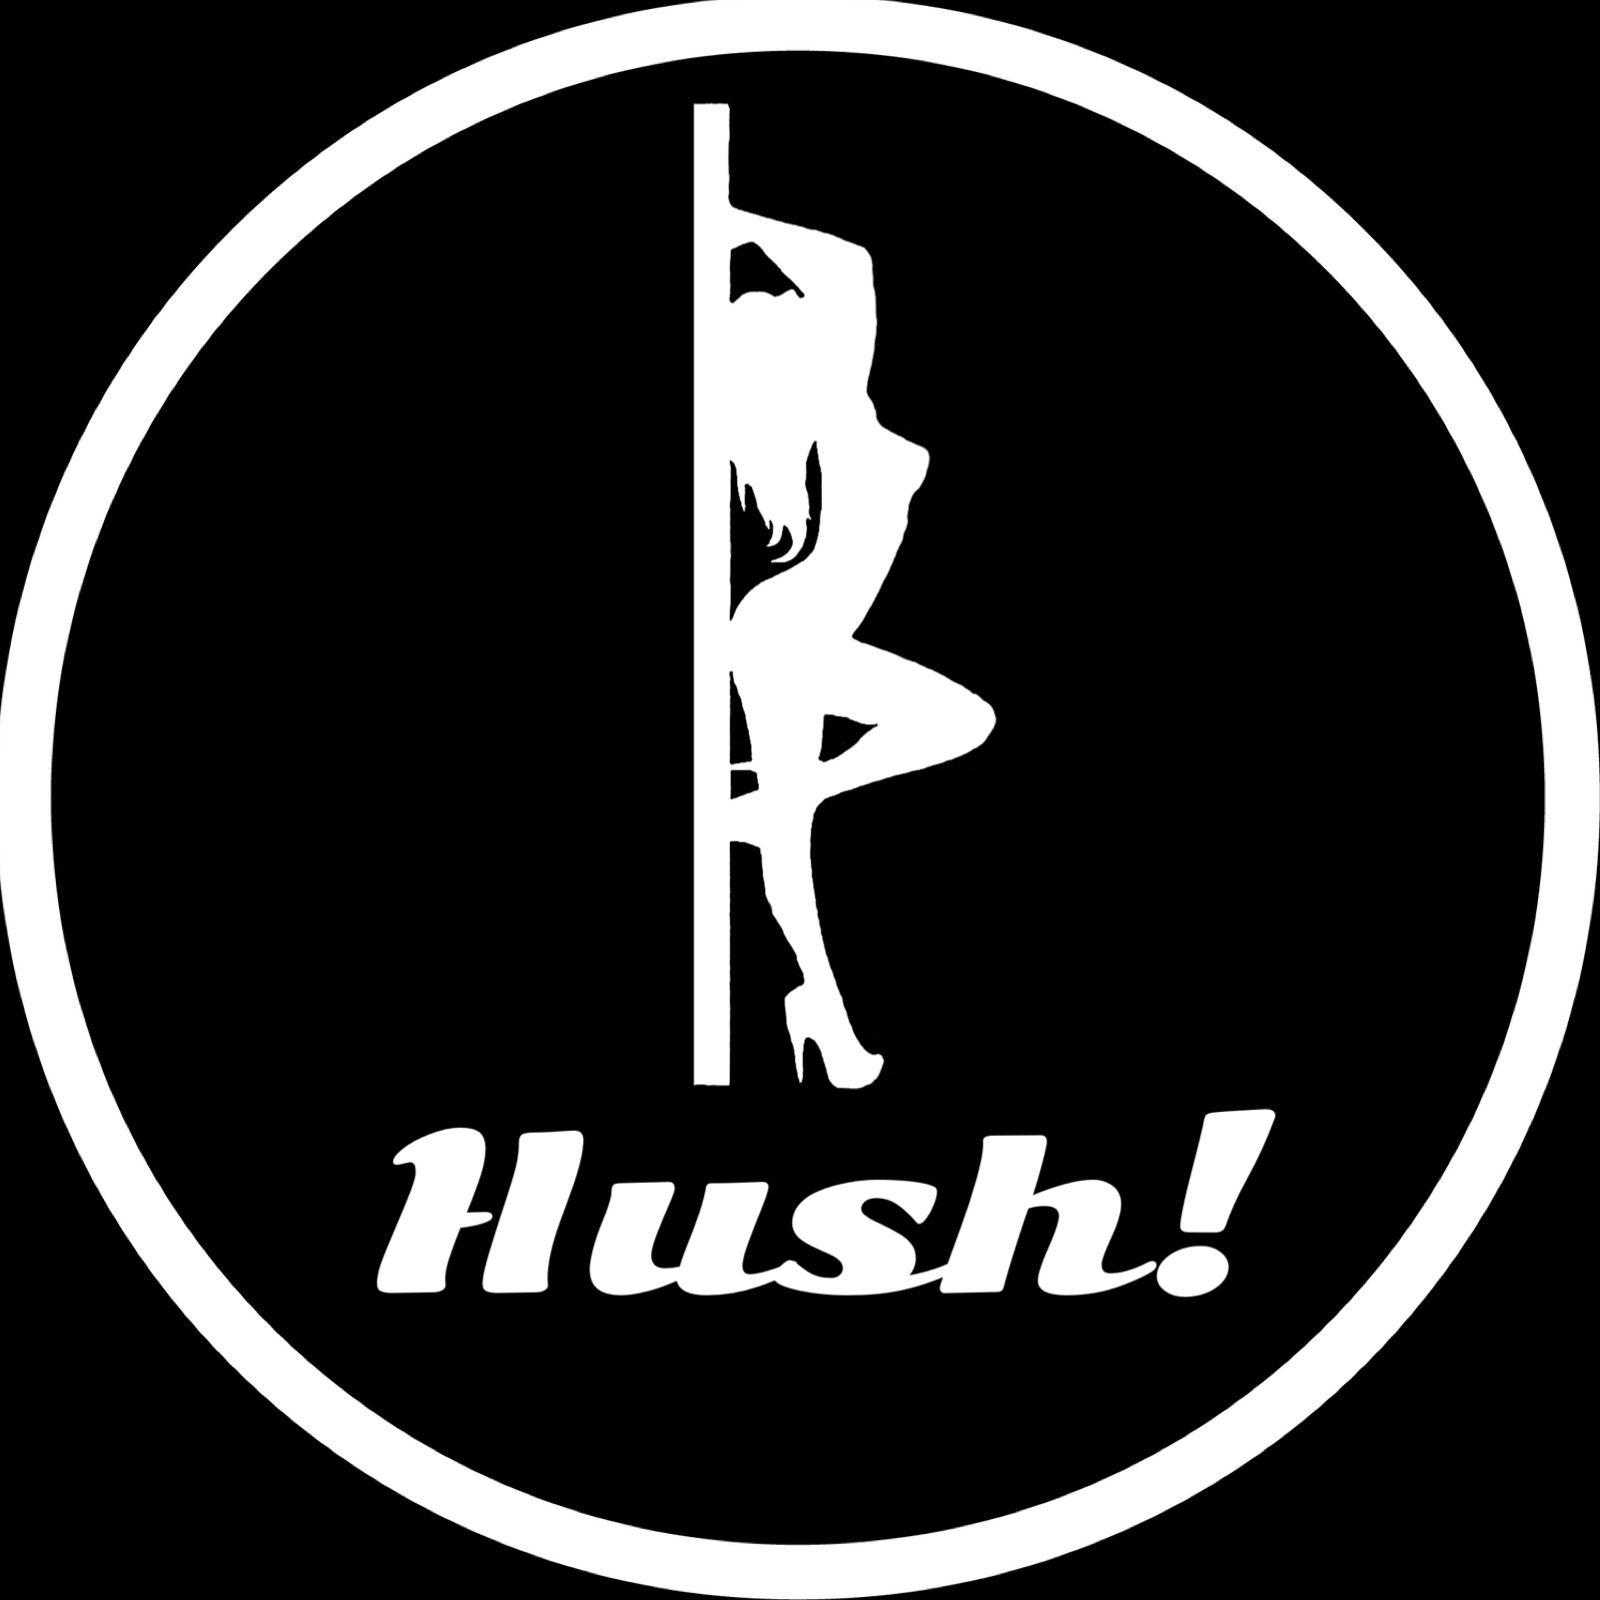 Hush! - Hush! Vol. 61- Xplore Your Sexual Desire